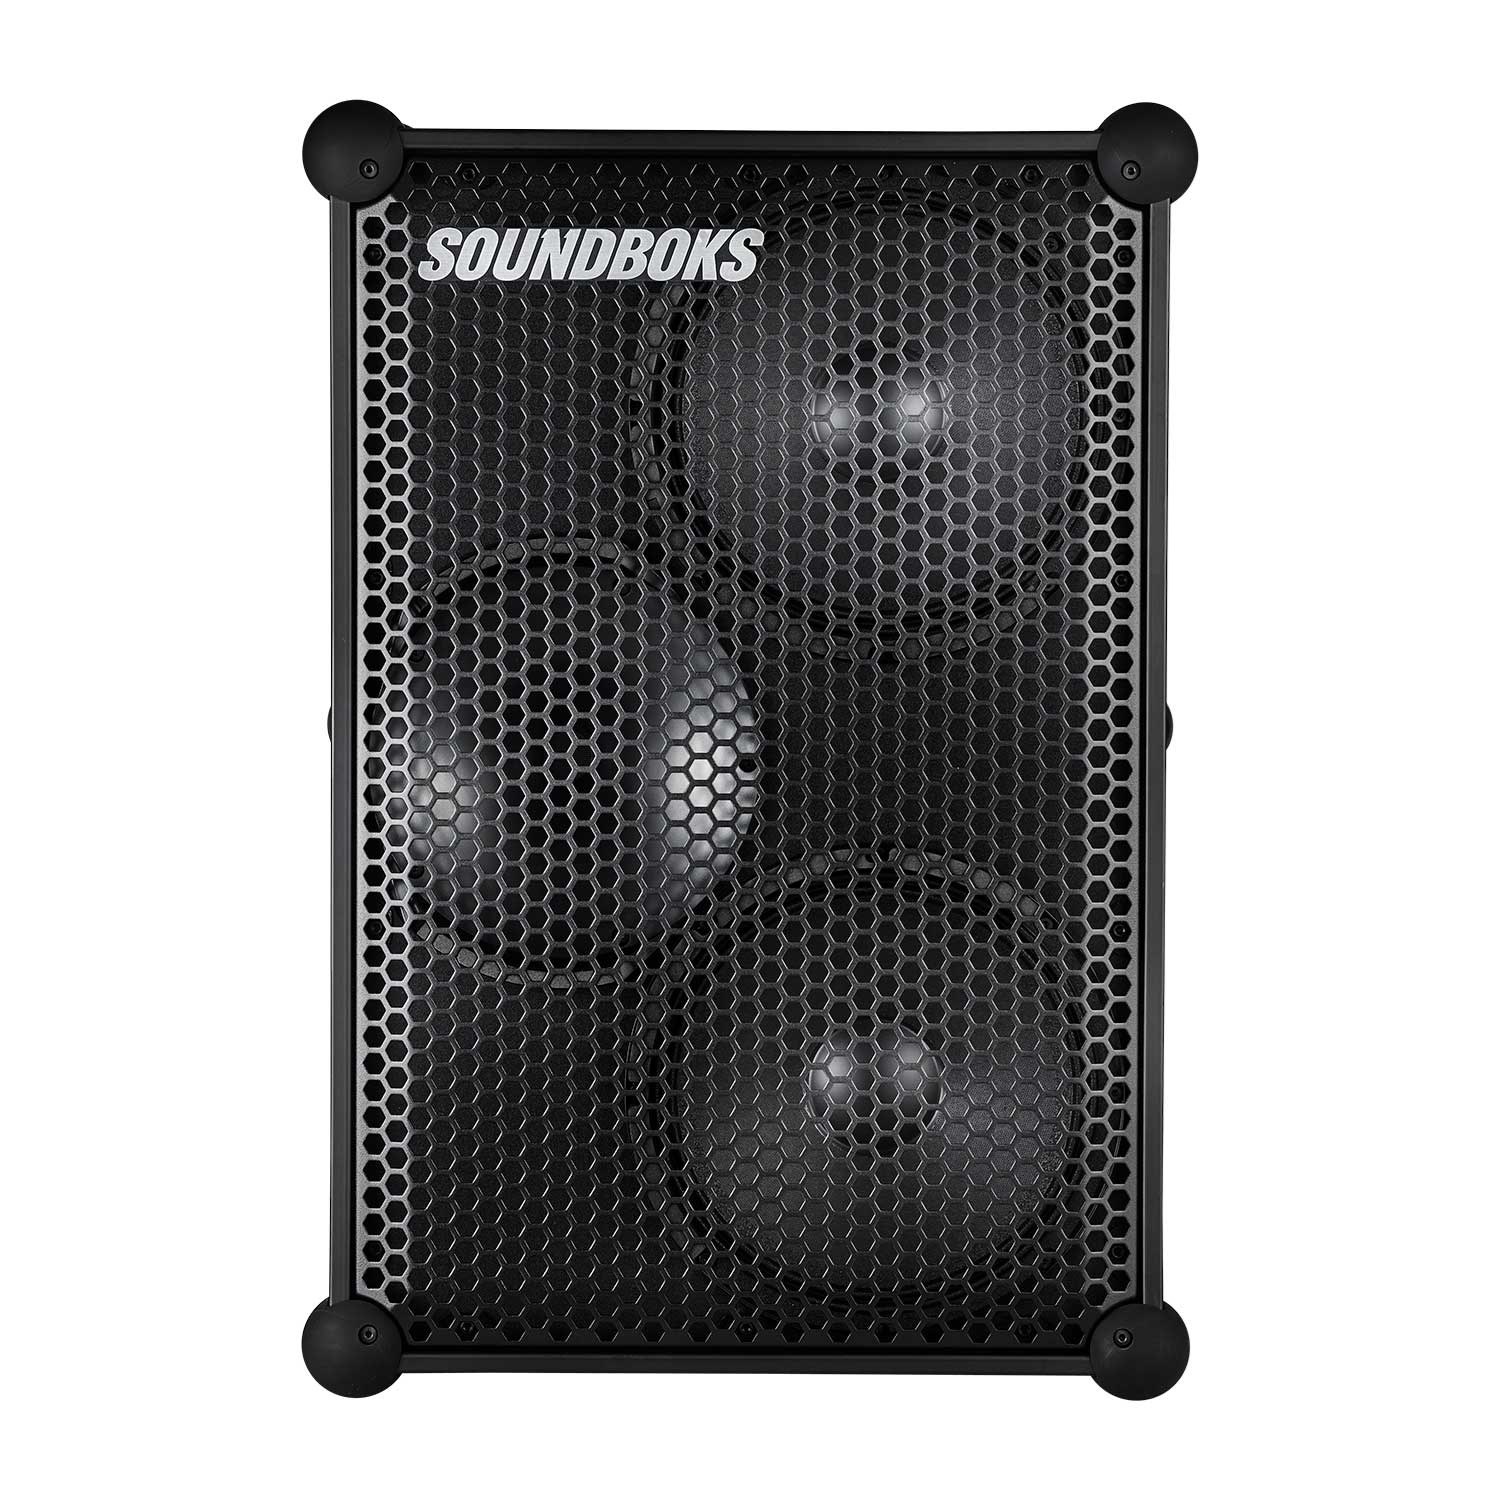 Soundboks 3.0 - Wireless musicbox